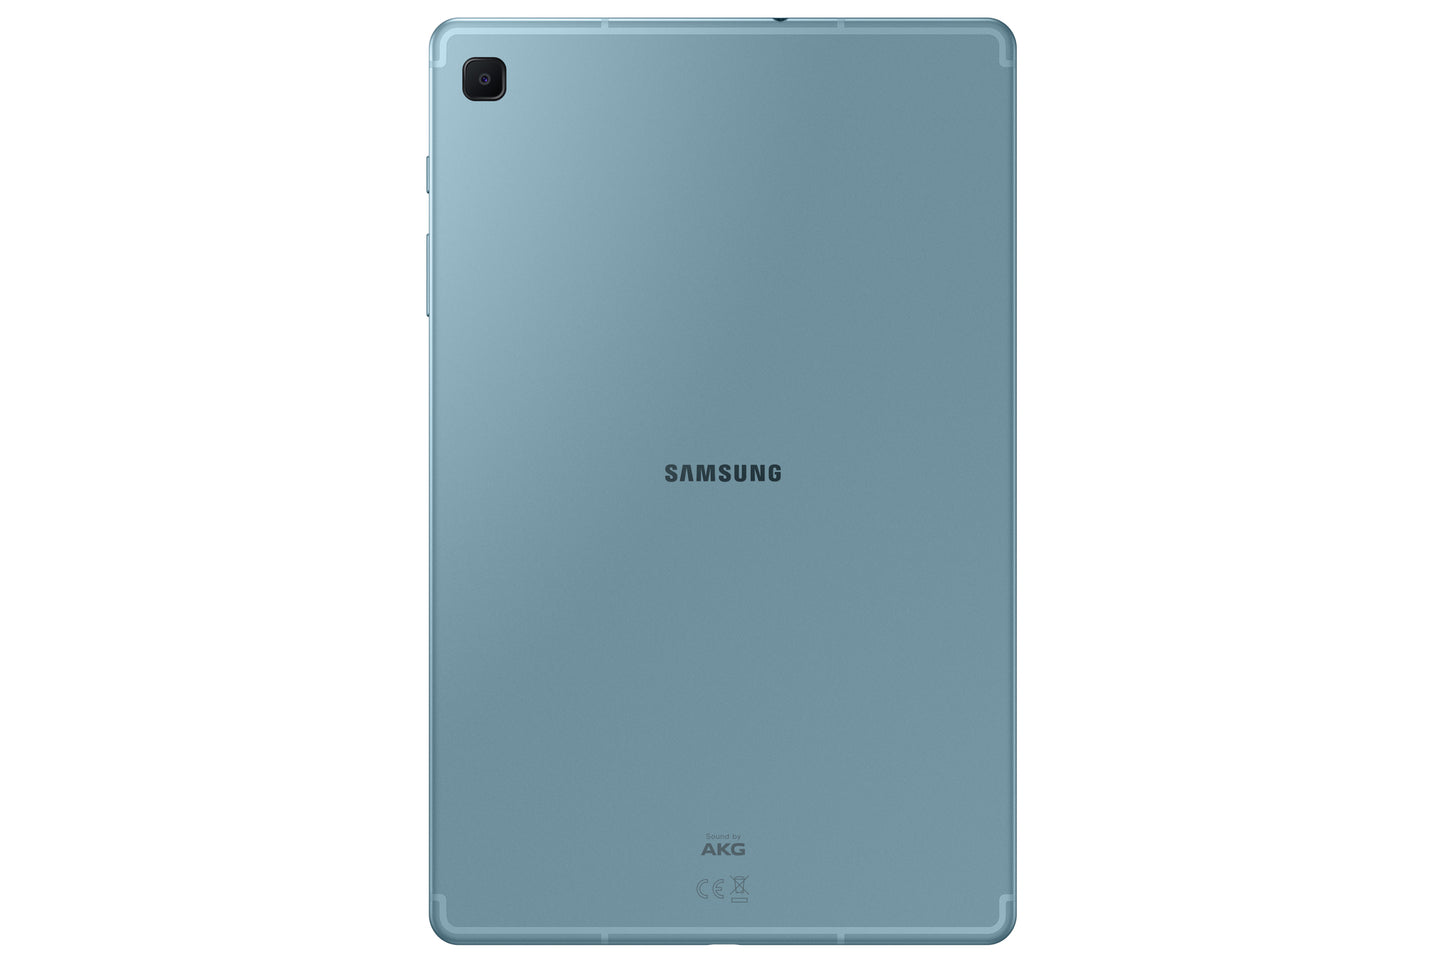 Samsung Galaxy Tab S6 Lite Wi-Fi 64GB 10.4-in Tablet - Angora Blue